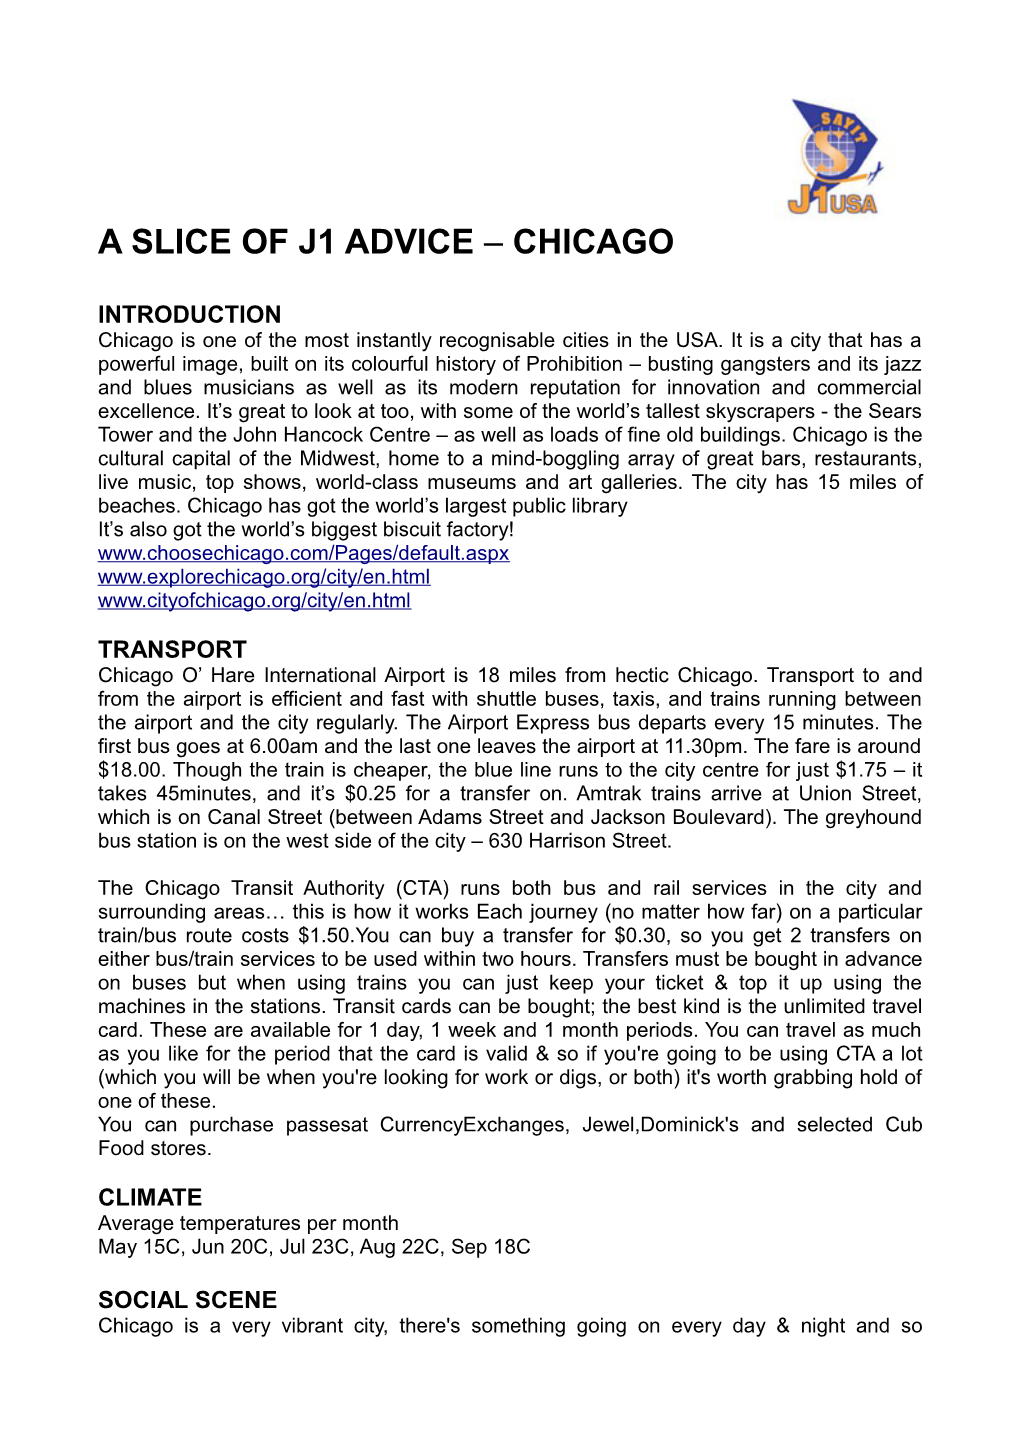 A Slice of J1 Advice Chicago